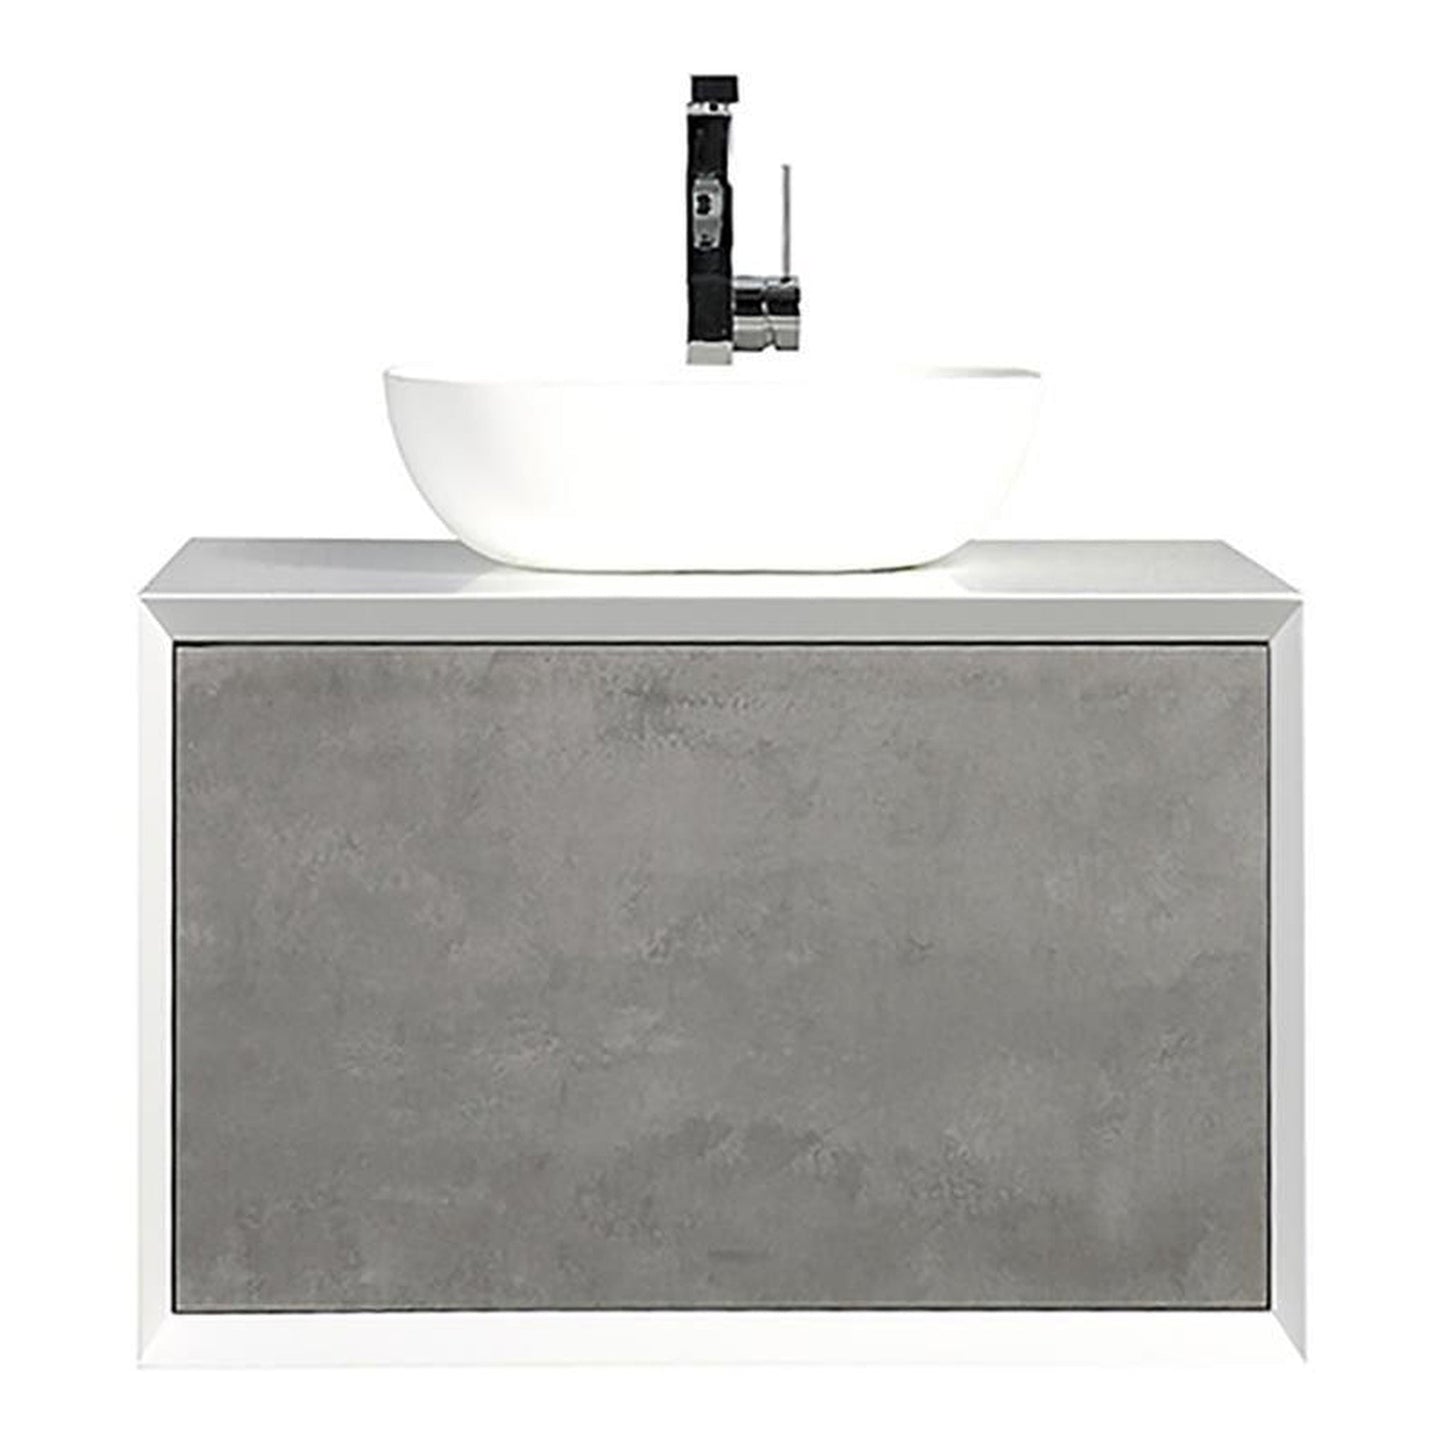 Eviva Santa Monica 36" x 16" Gray Wall-Mounted Bathroom Vanity With White Porcelain Vessel Sink